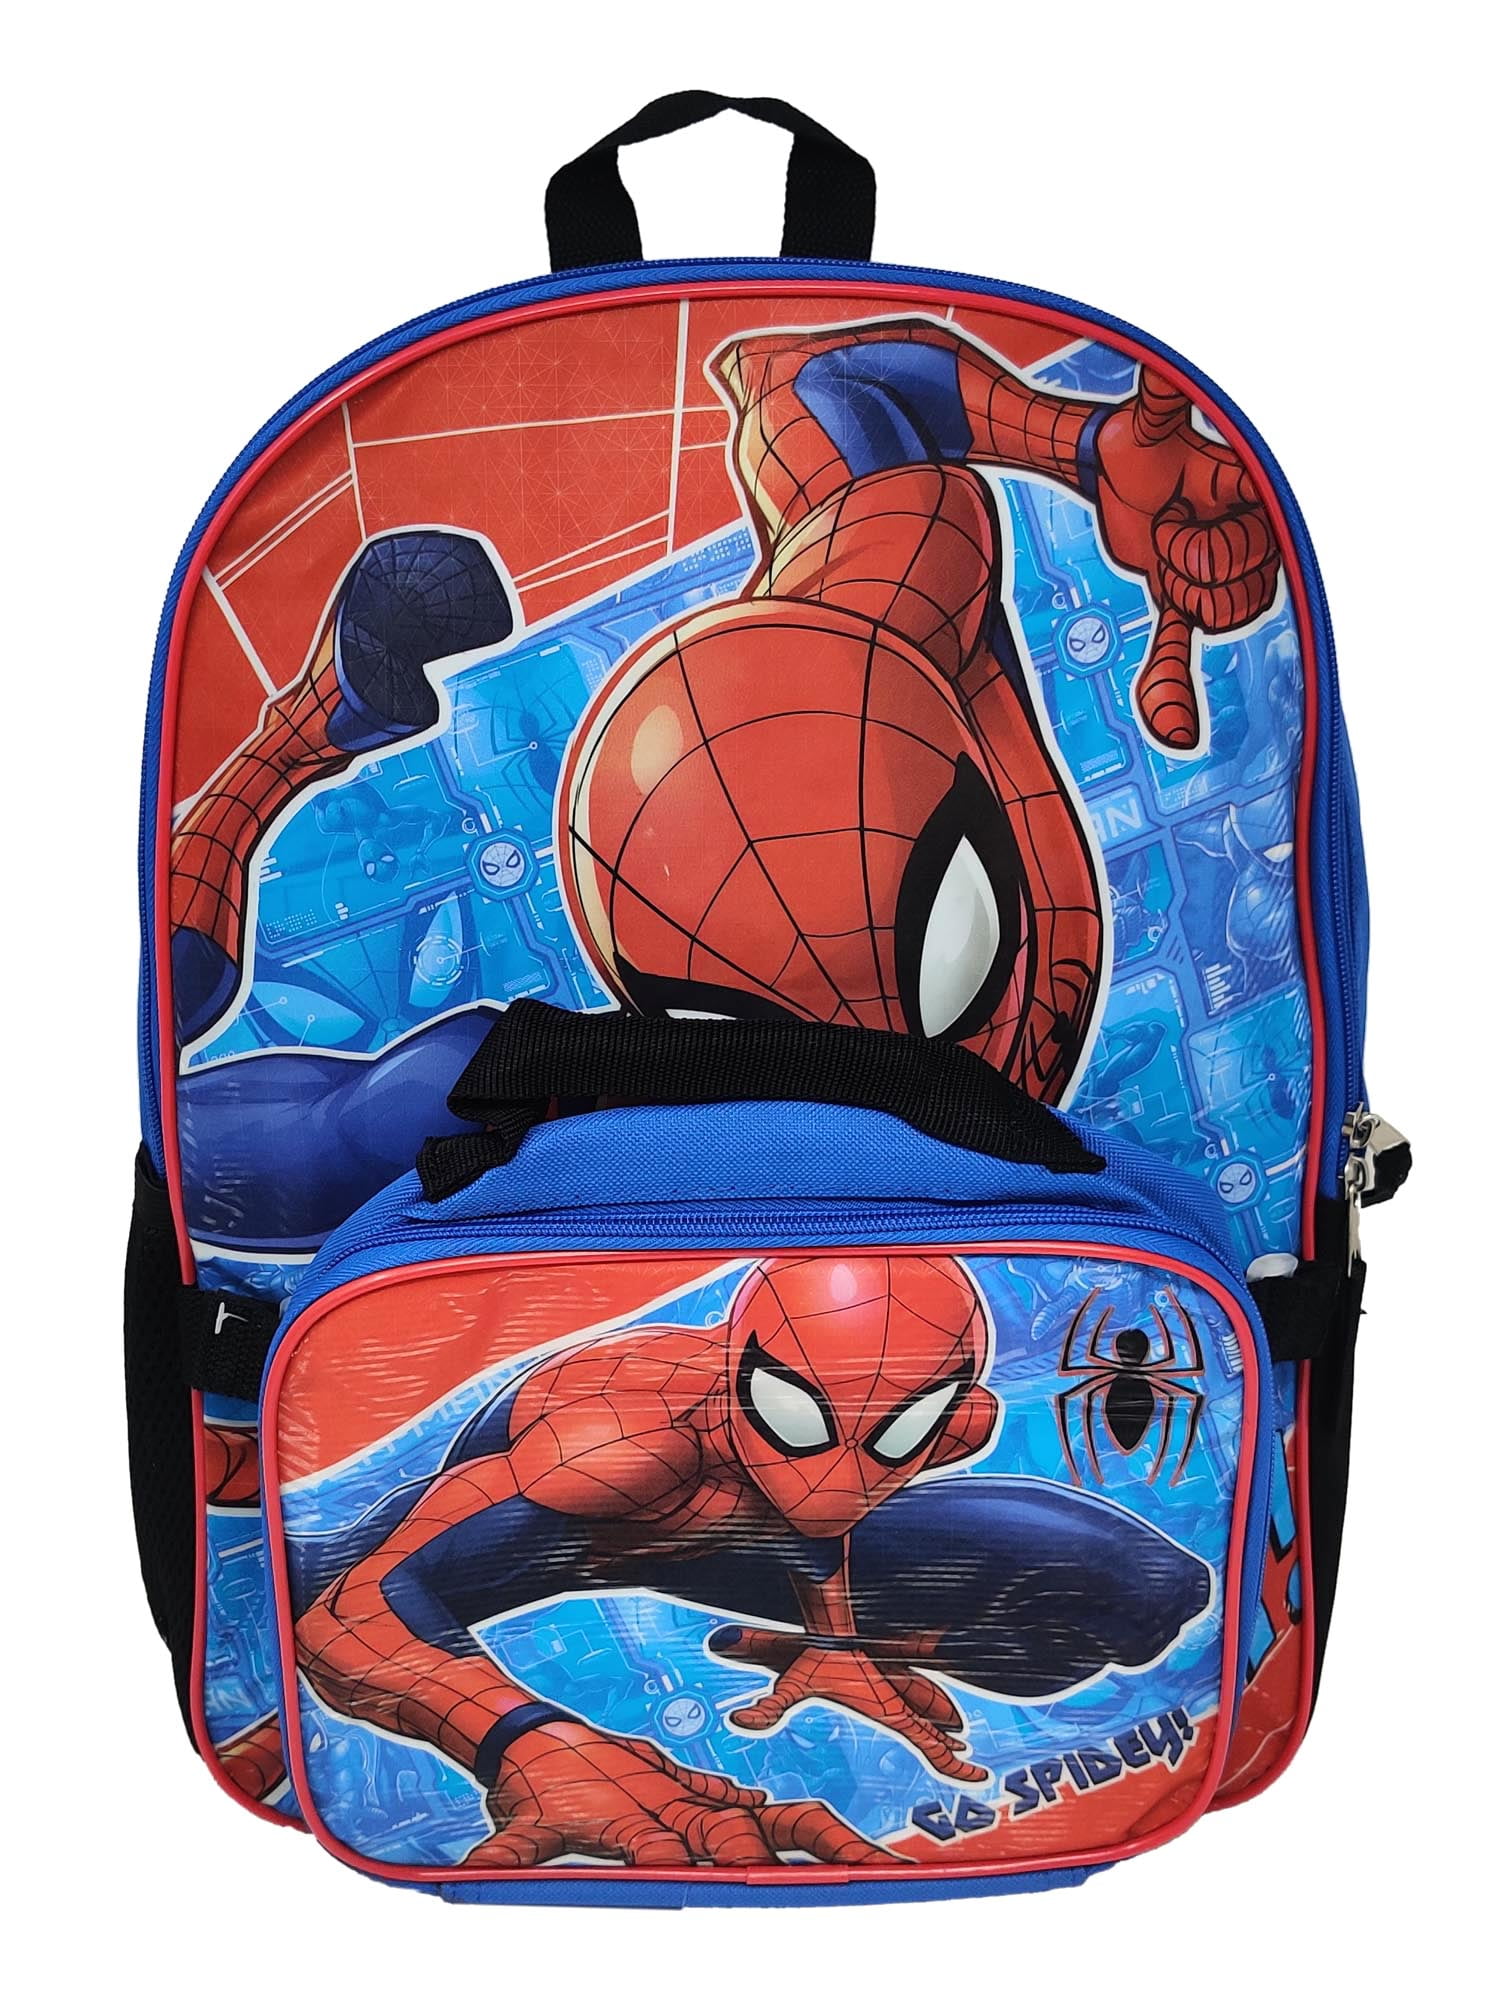 New Super Heroes Spider-Man Figure Backpack Schoolbag Bag Kids Boy Girl Toy Gift 